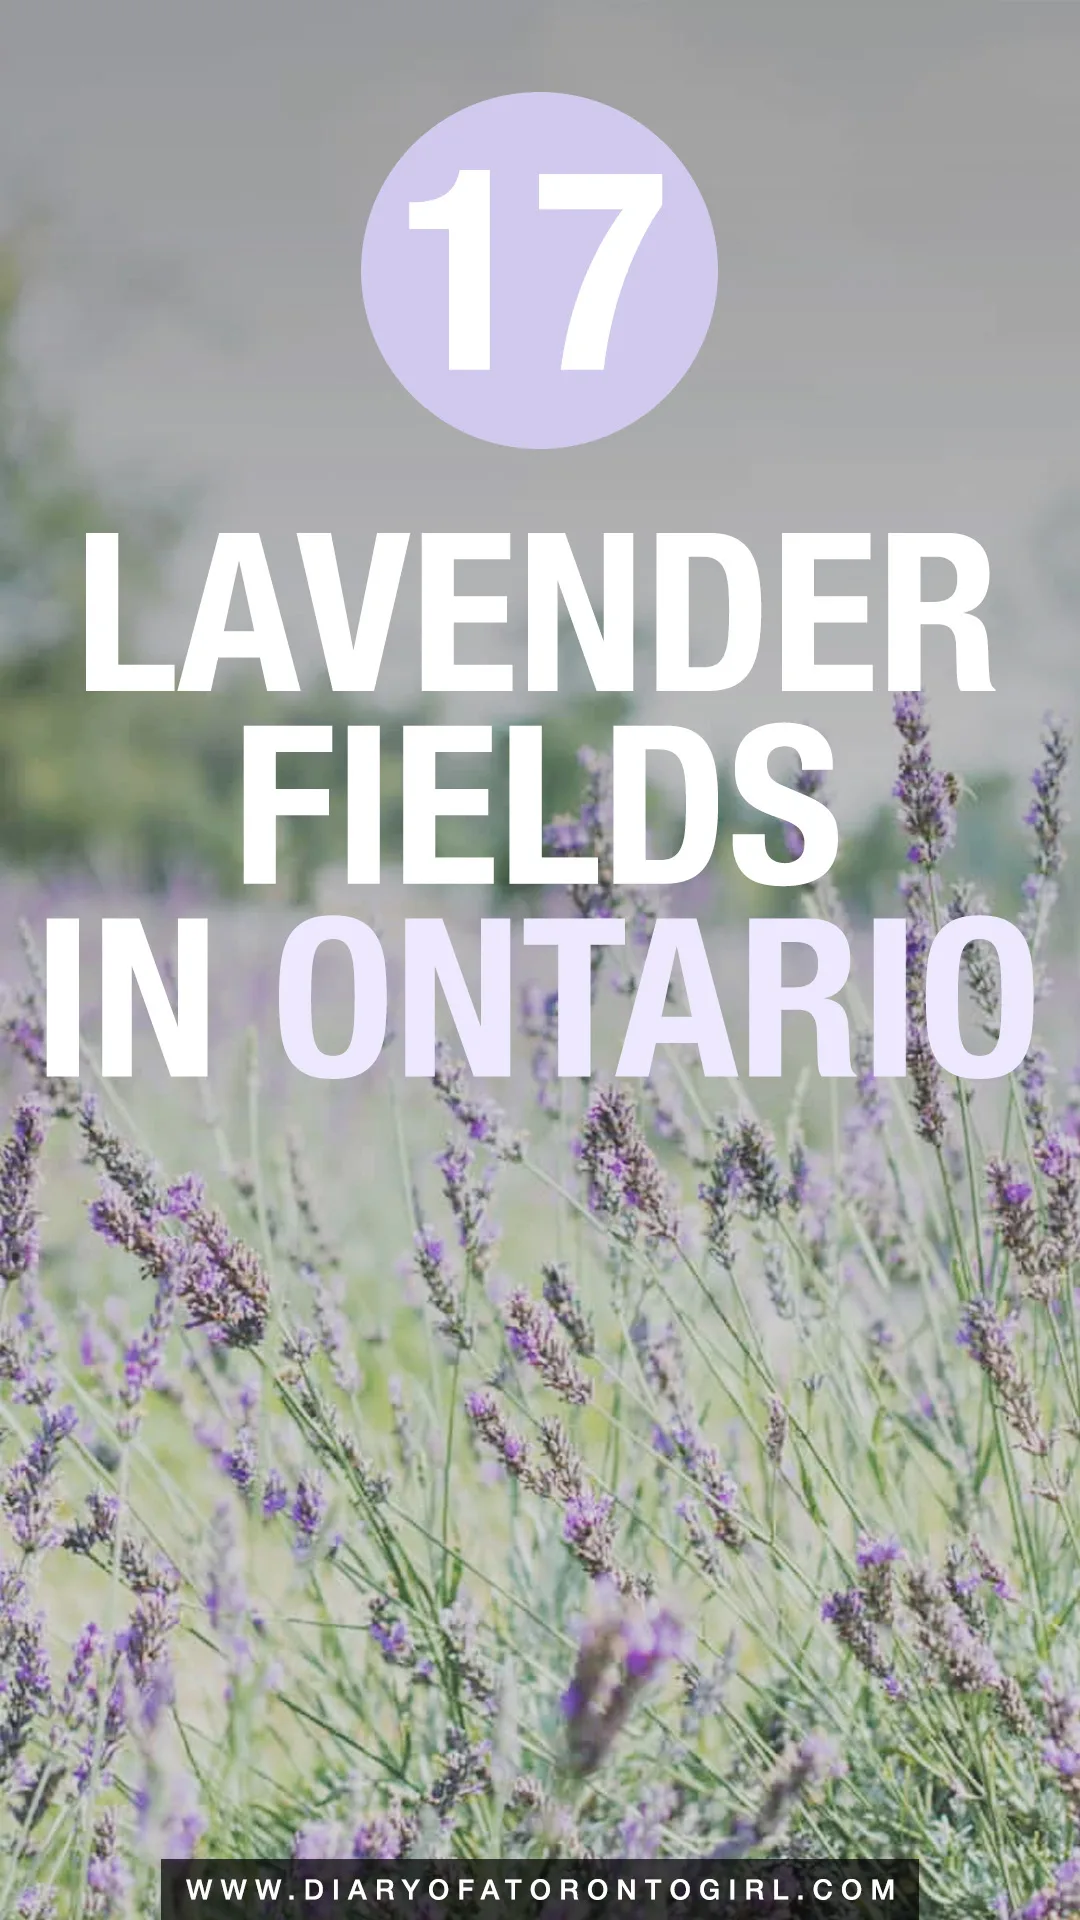 Lavender fields in Ontario